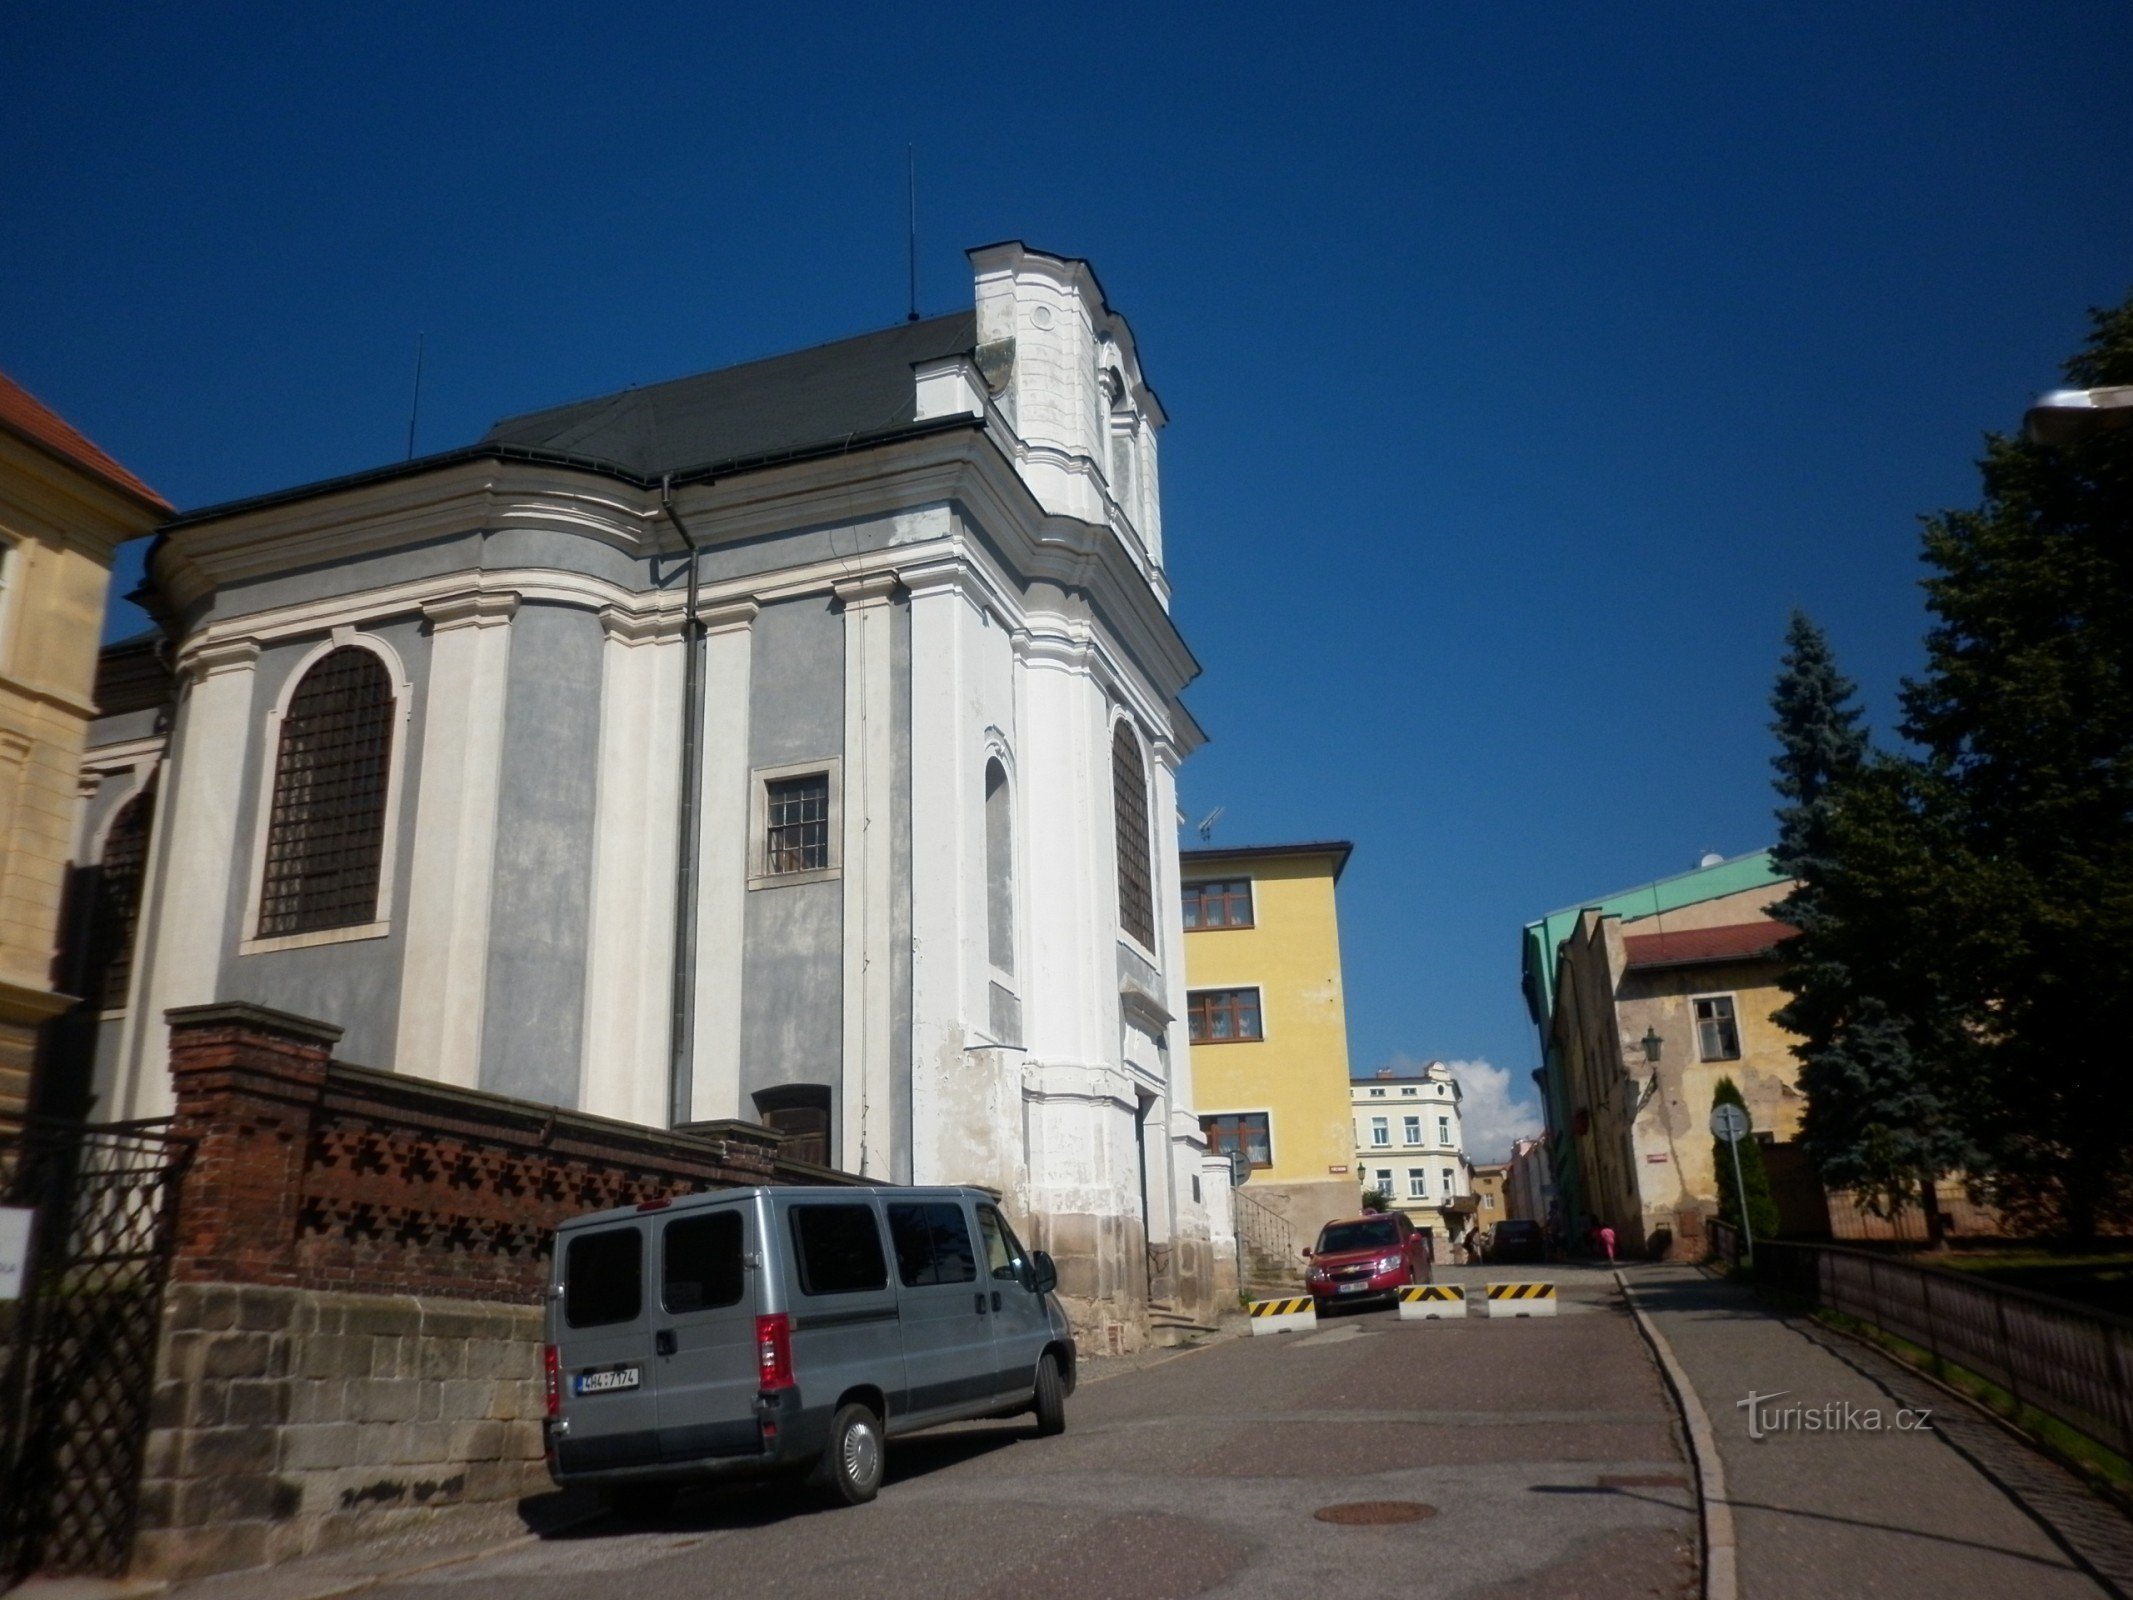 church of st. Wenceslas